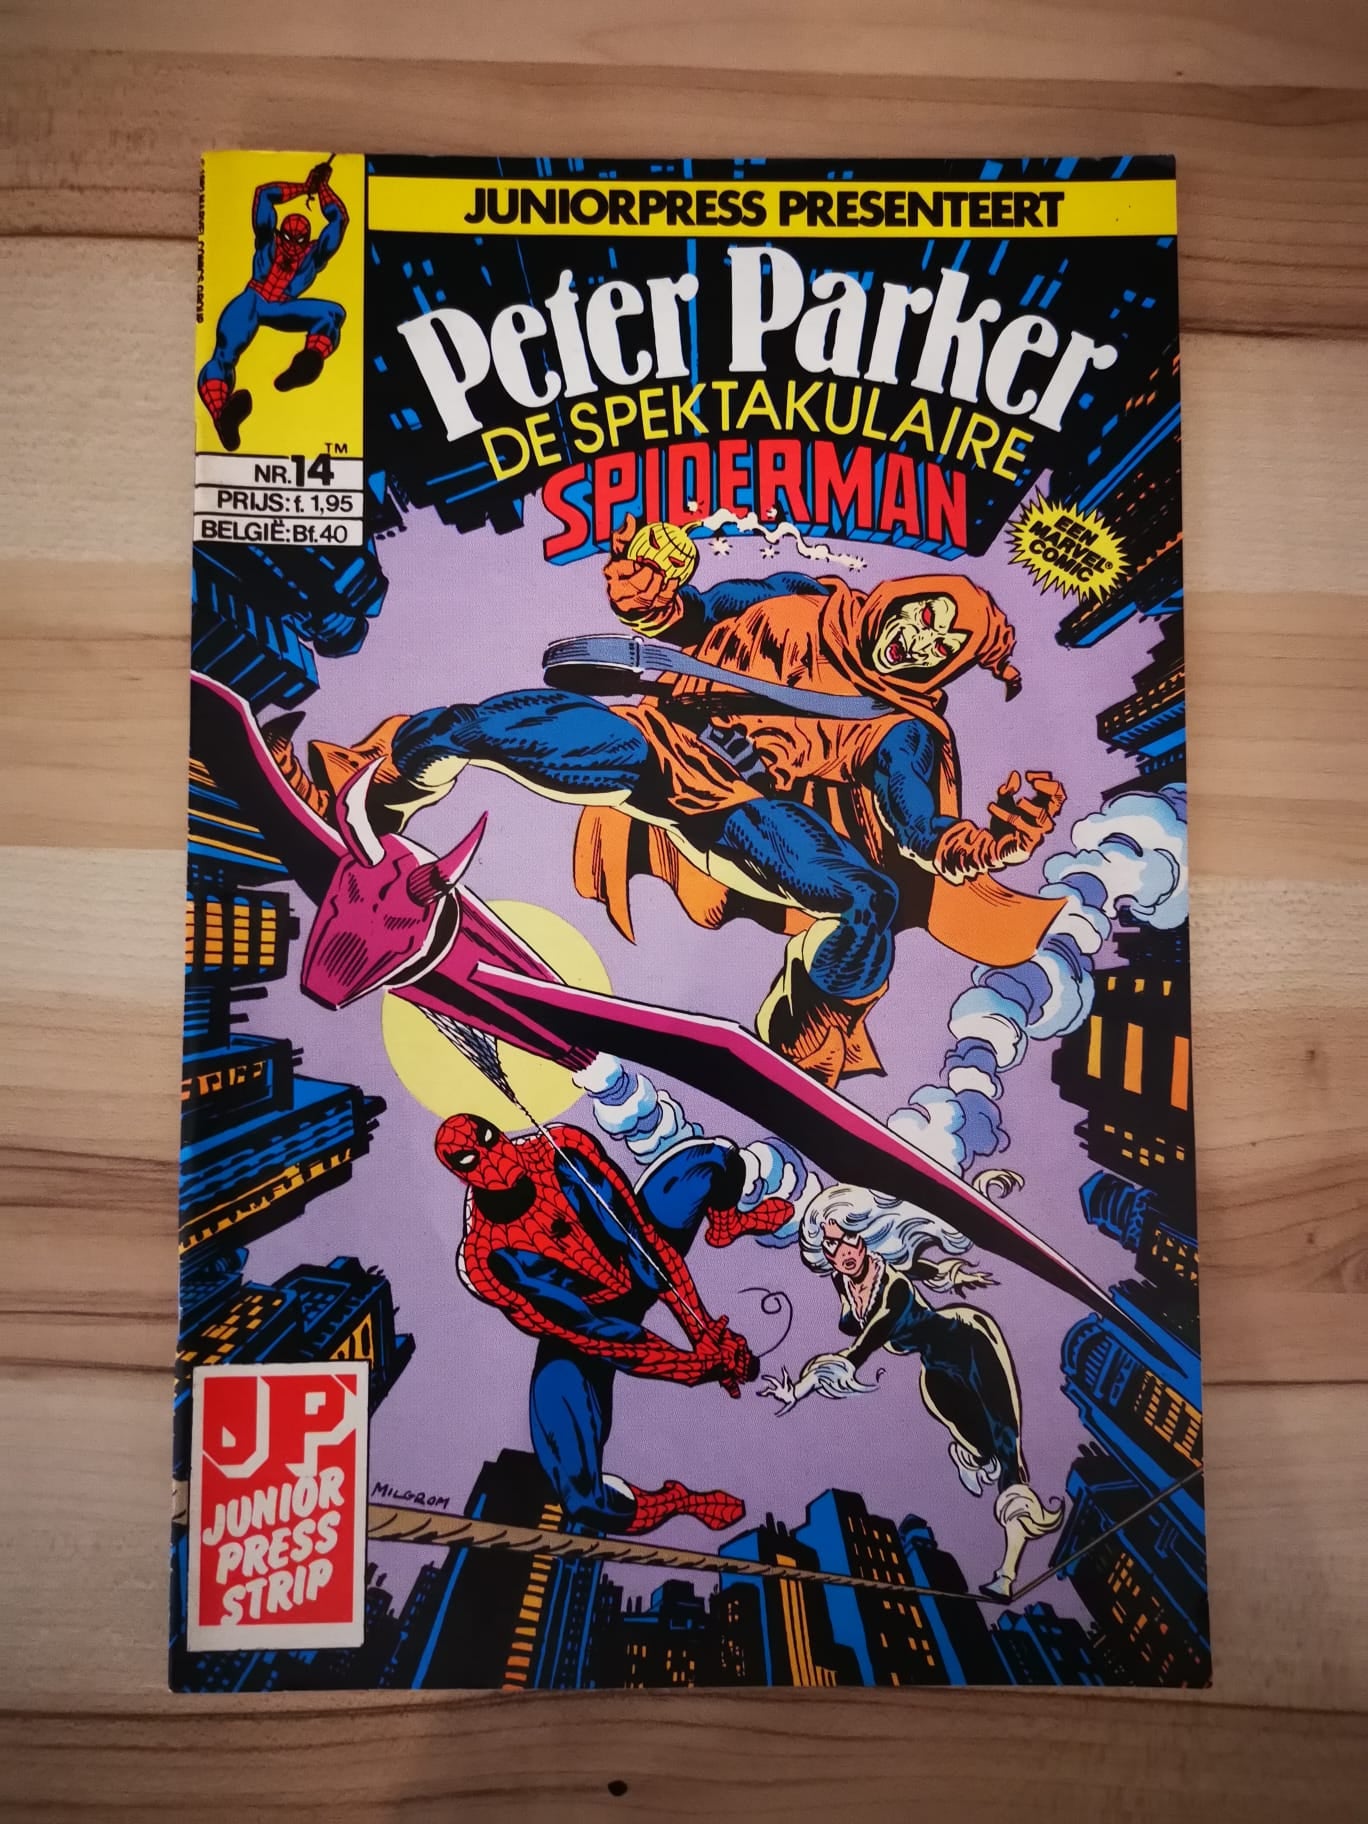 Peter Parker De spektakulaire spiderman #14